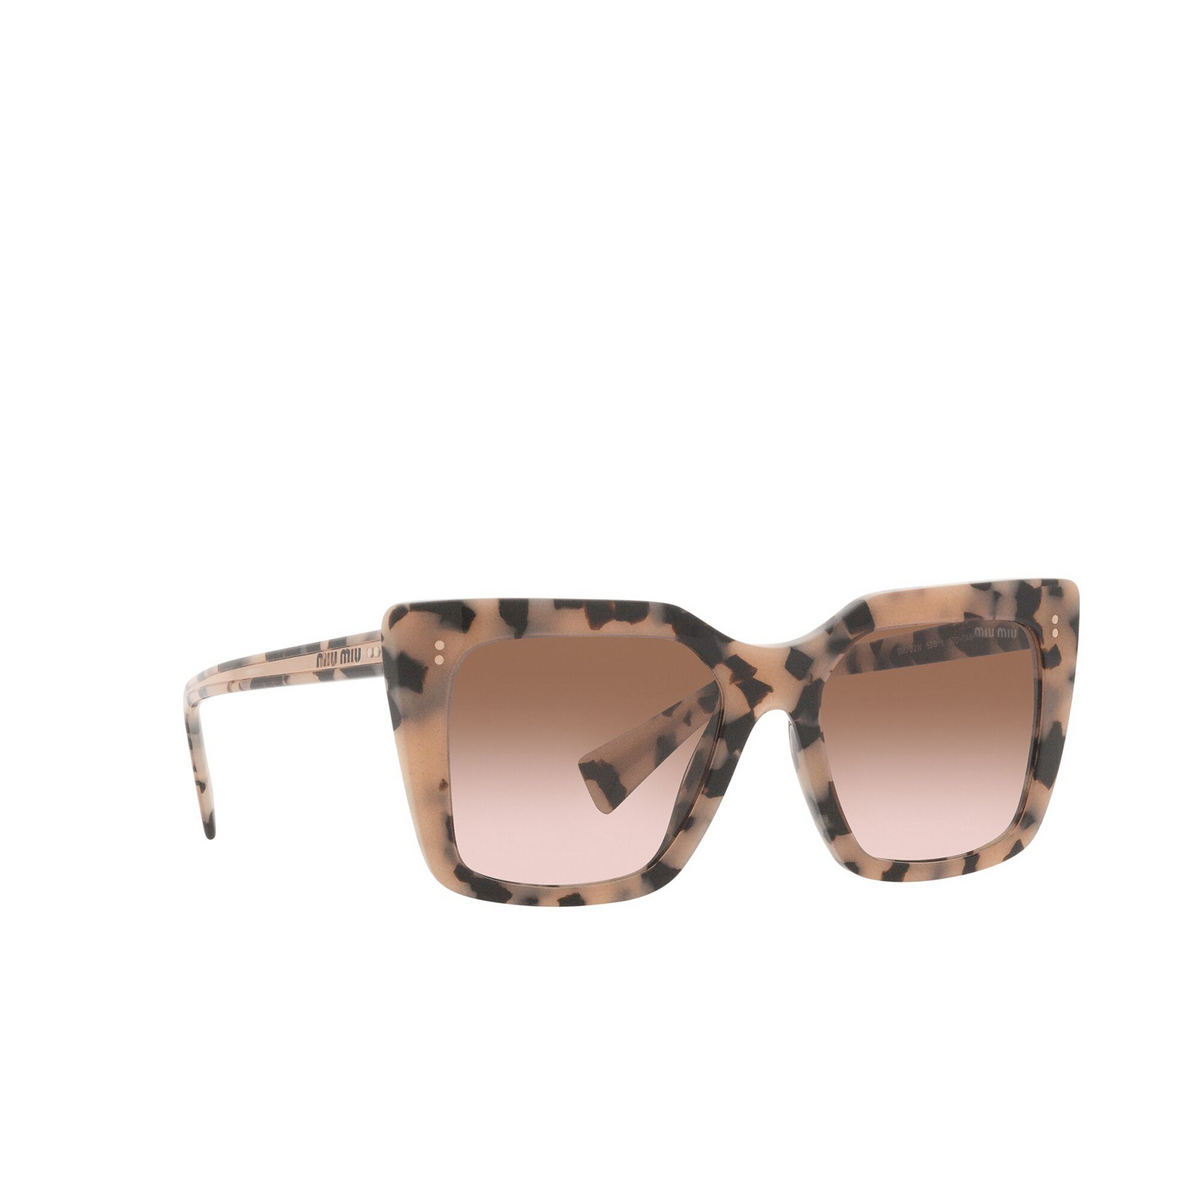 Miu Miu® Square Sunglasses: MU 02WS color Pink Havana 07D0A6 - three-quarters view.